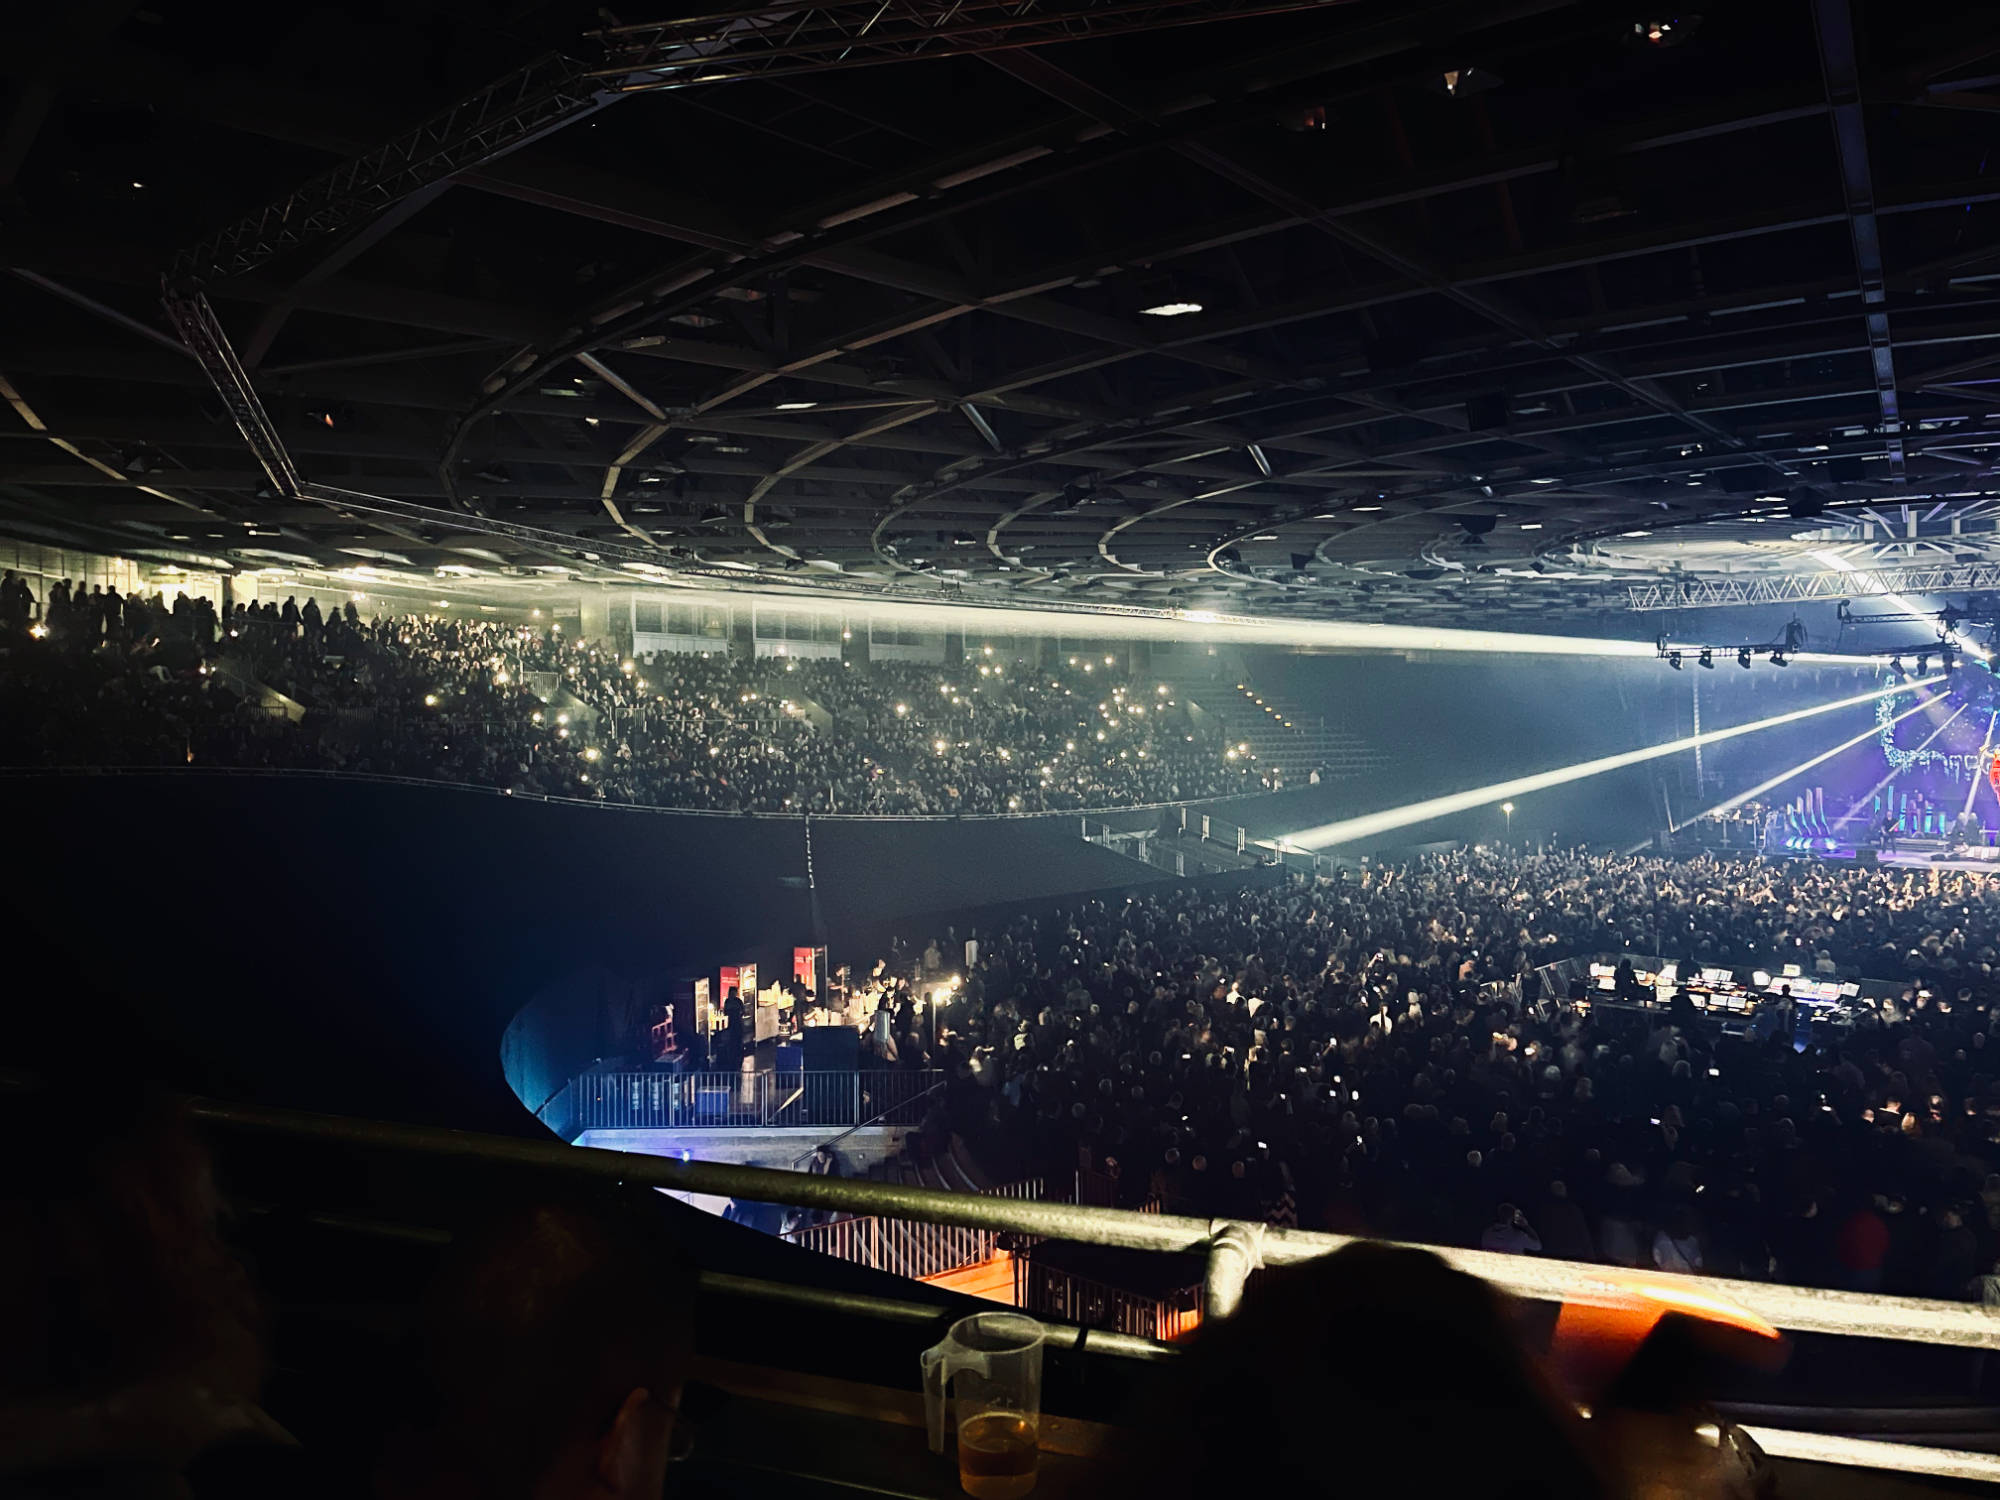 Stadium audience holding up hundreds of little lights